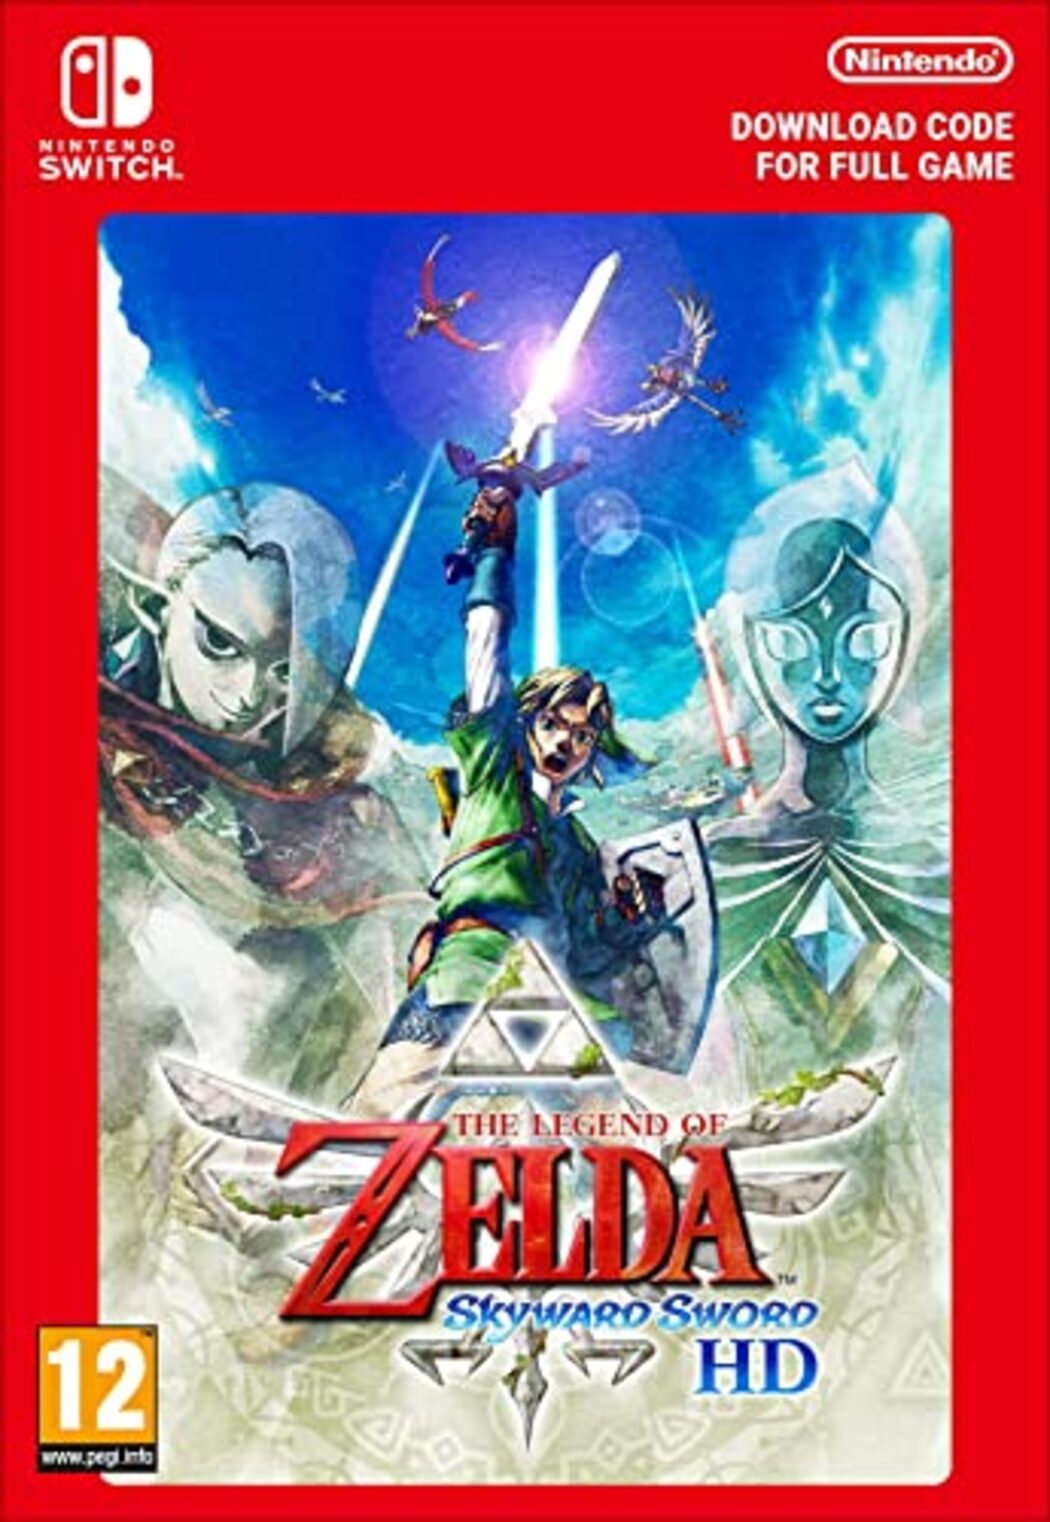 Buy The Sword Nintendo Skyward ENEBA Zelda: of price | Legend HD key! Cheap